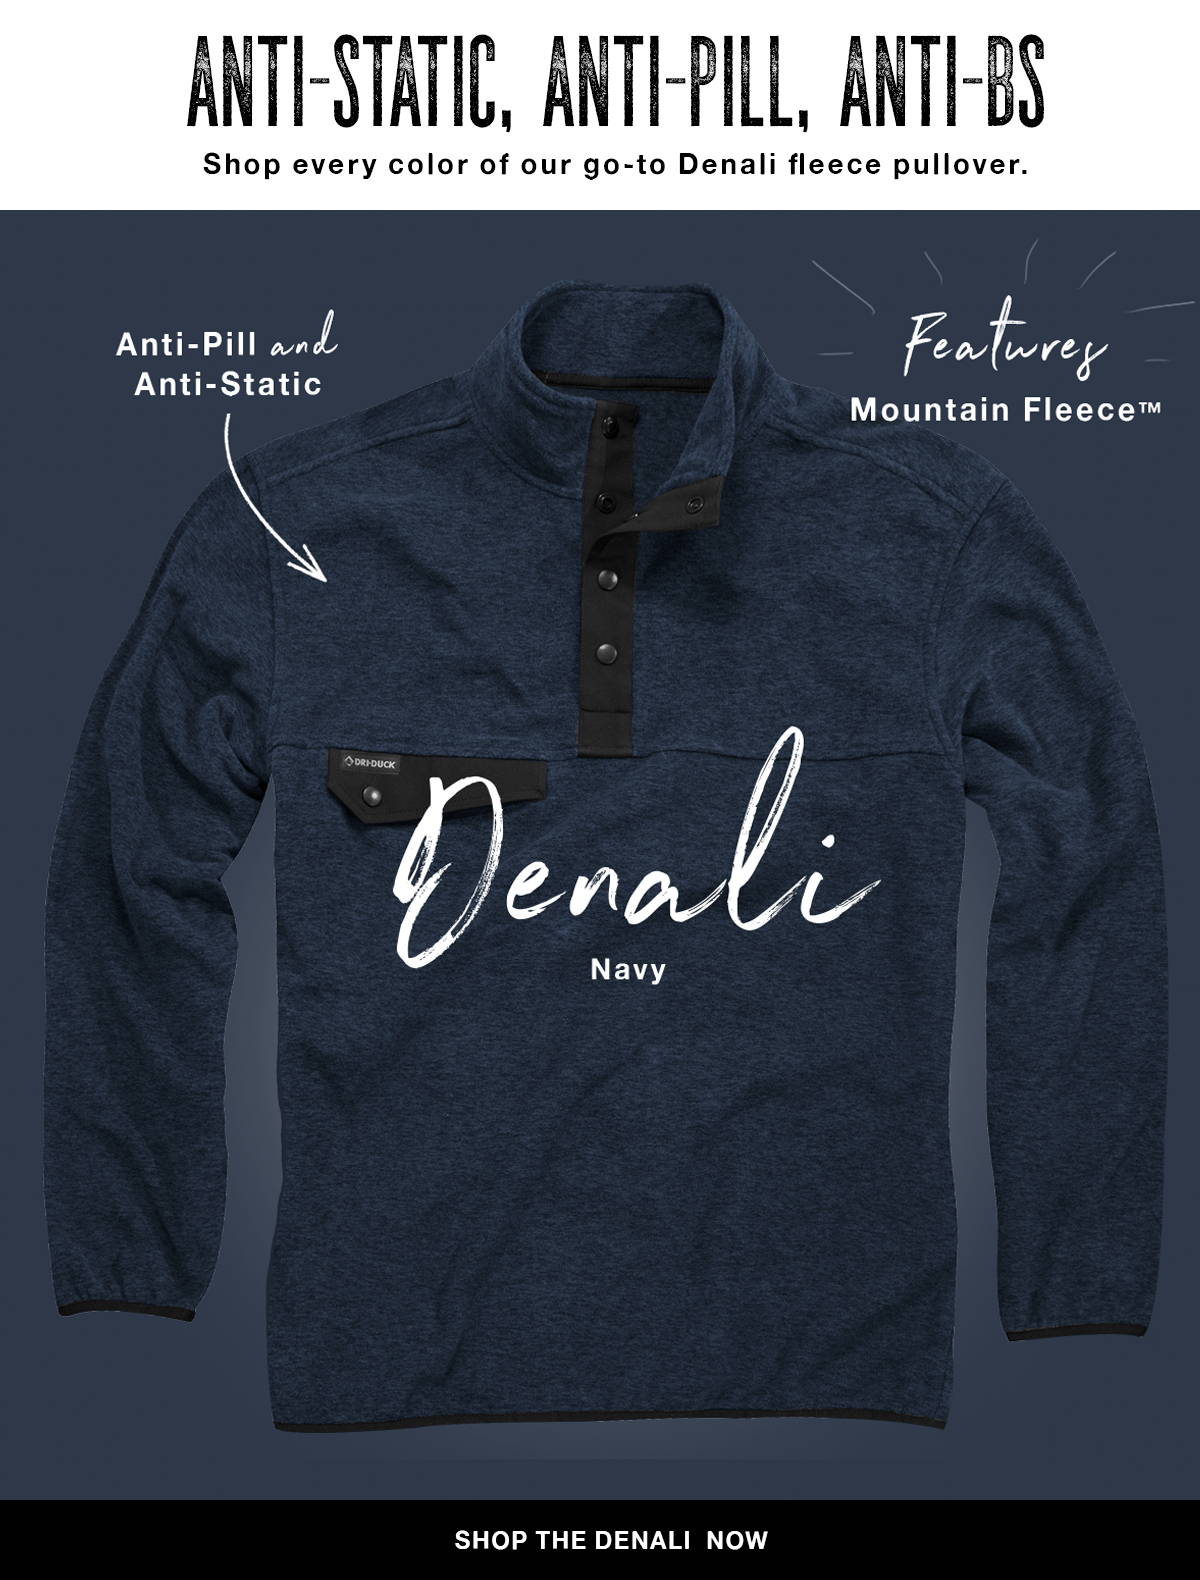 Email featuring a DRI DUCK men's fleece pullover